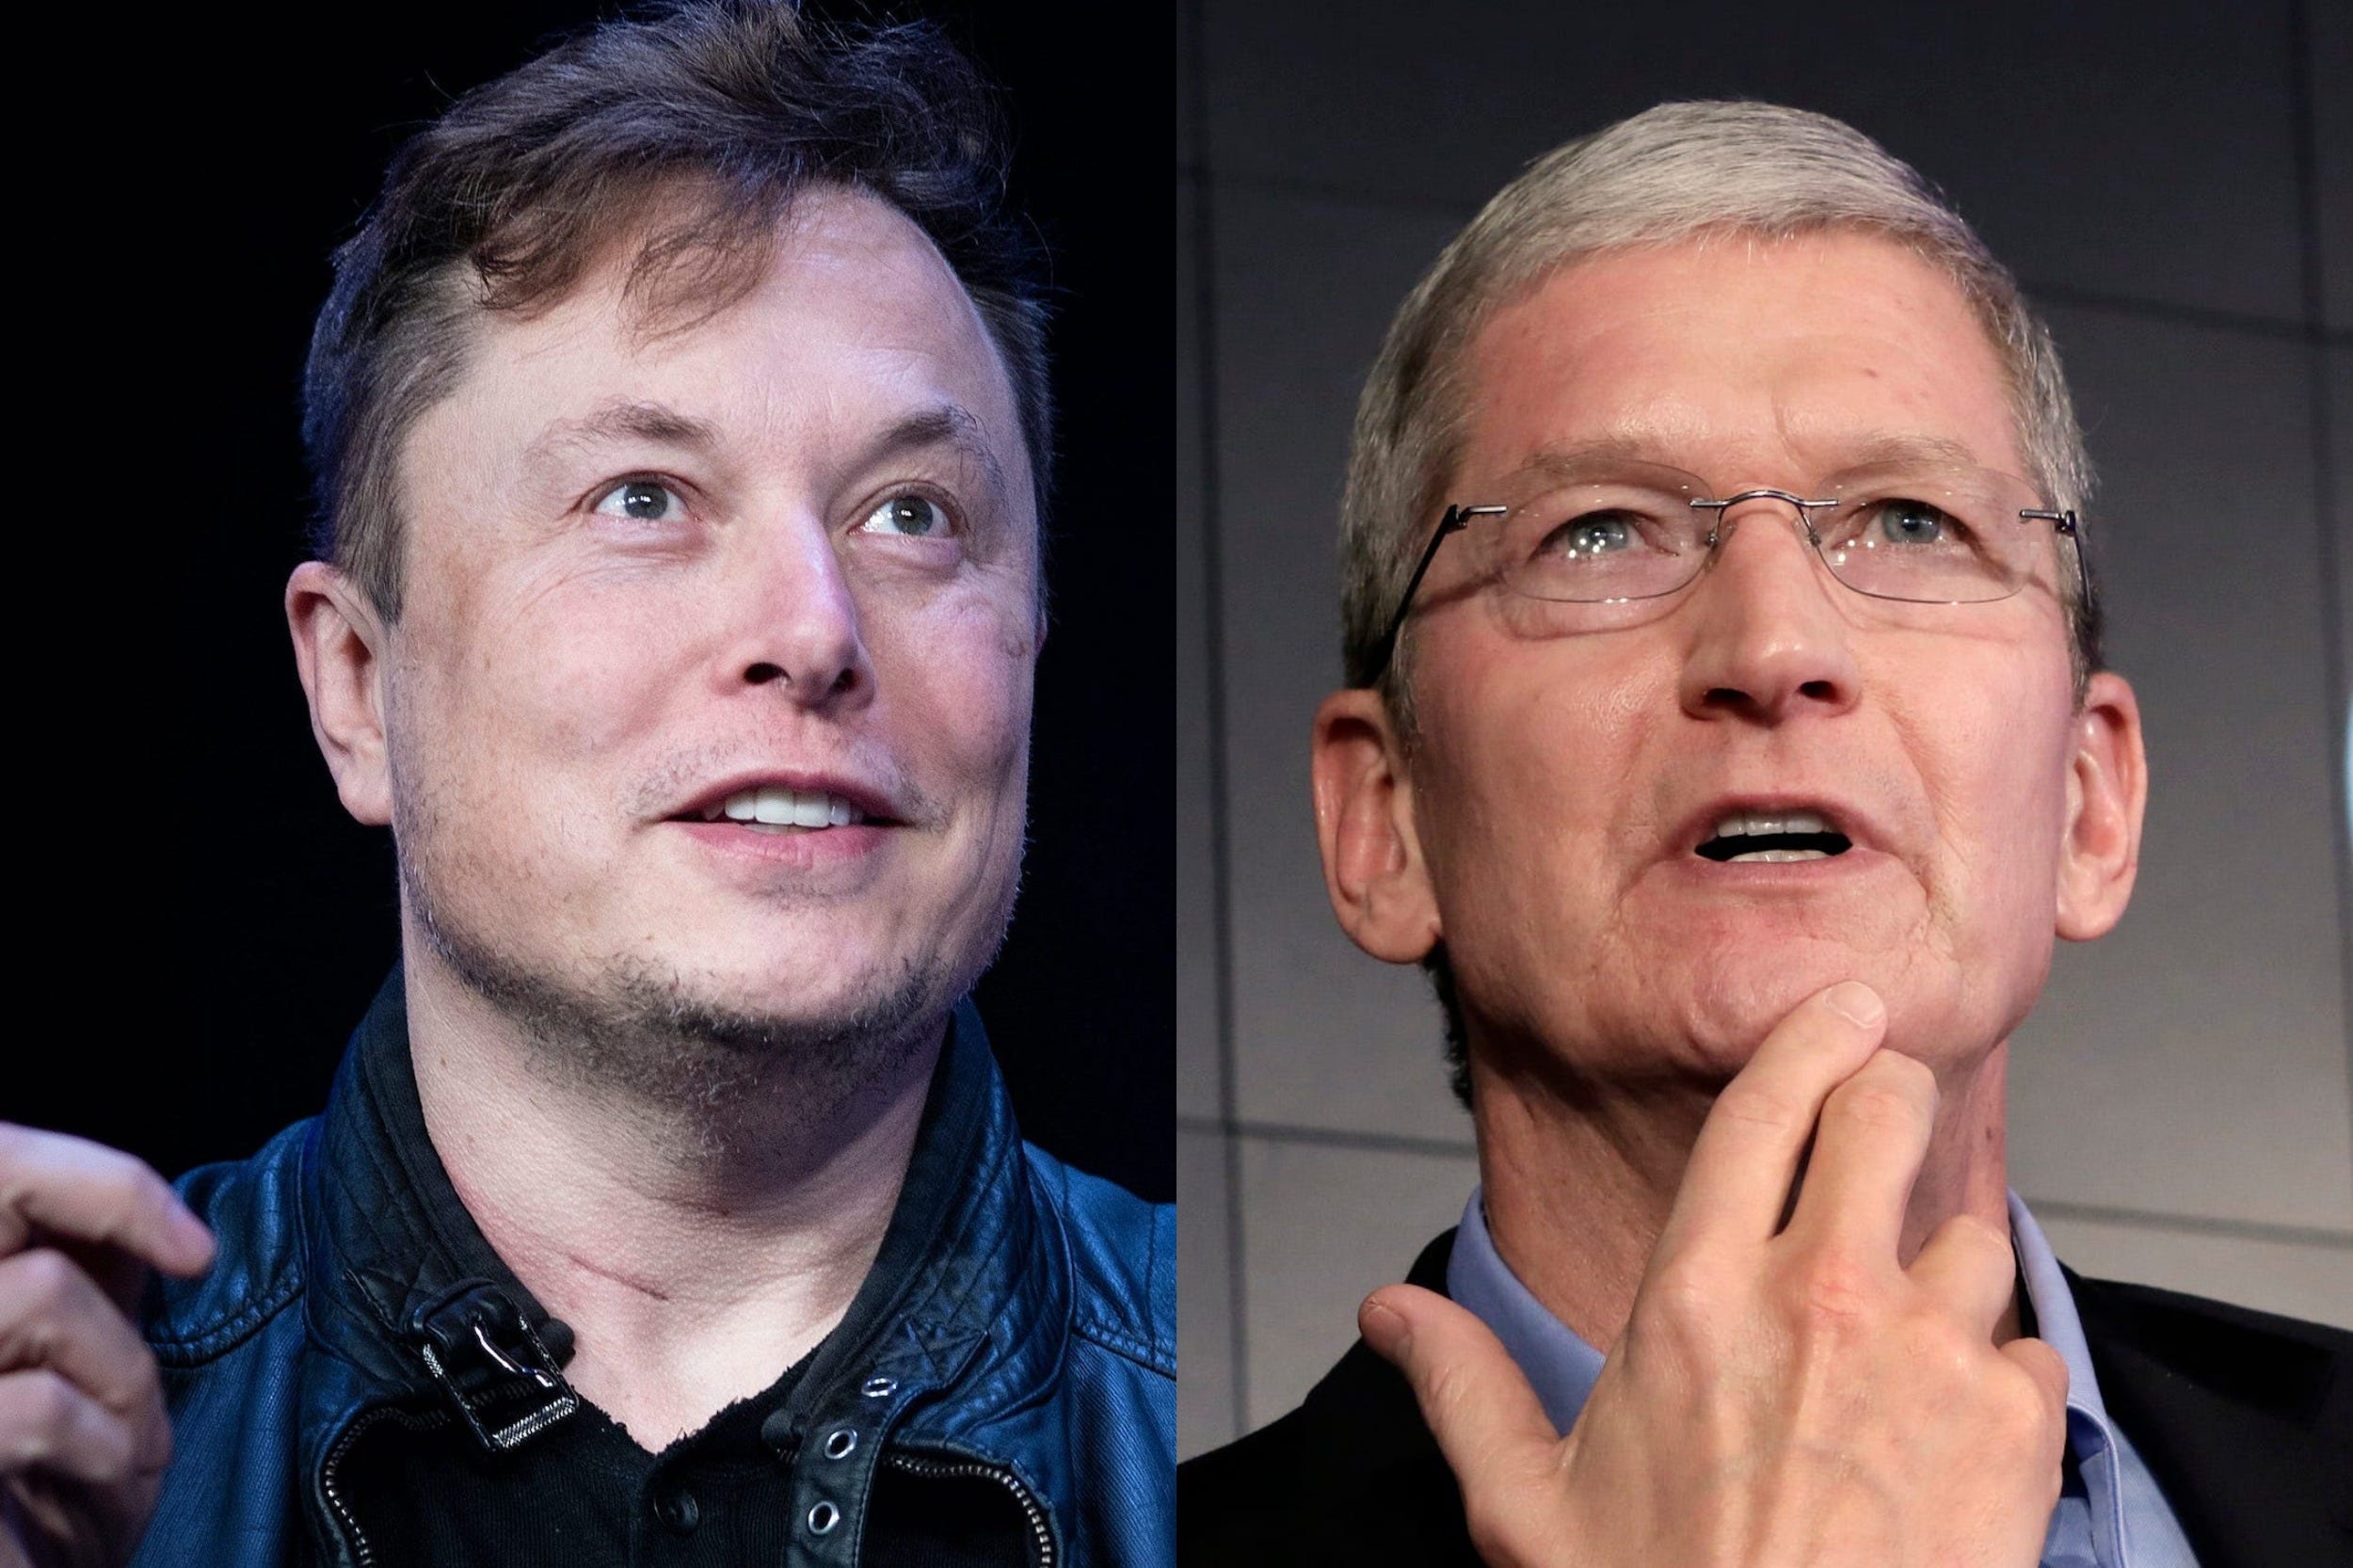 Tesla-oprichter Elon Musk en Apple-baas Tim Cook.